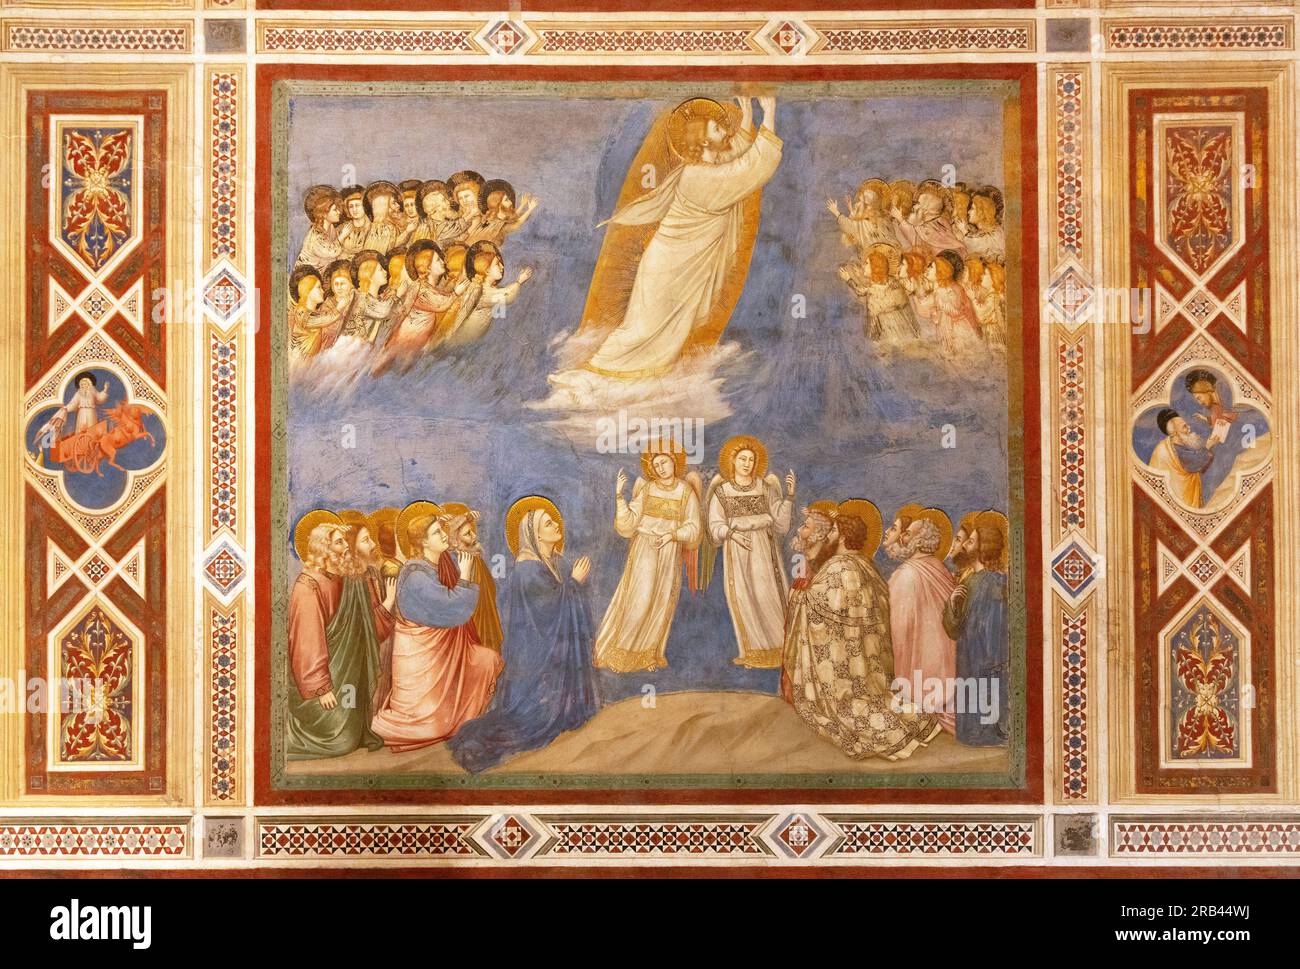 Giottos Fresken, die Scrovegni-Kapelle, Padua - italienische Renaissance-Gemälde des Lebens Christi aus dem 14. Jahrhundert; hier „Aufstieg“; Padua Italien Stockfoto